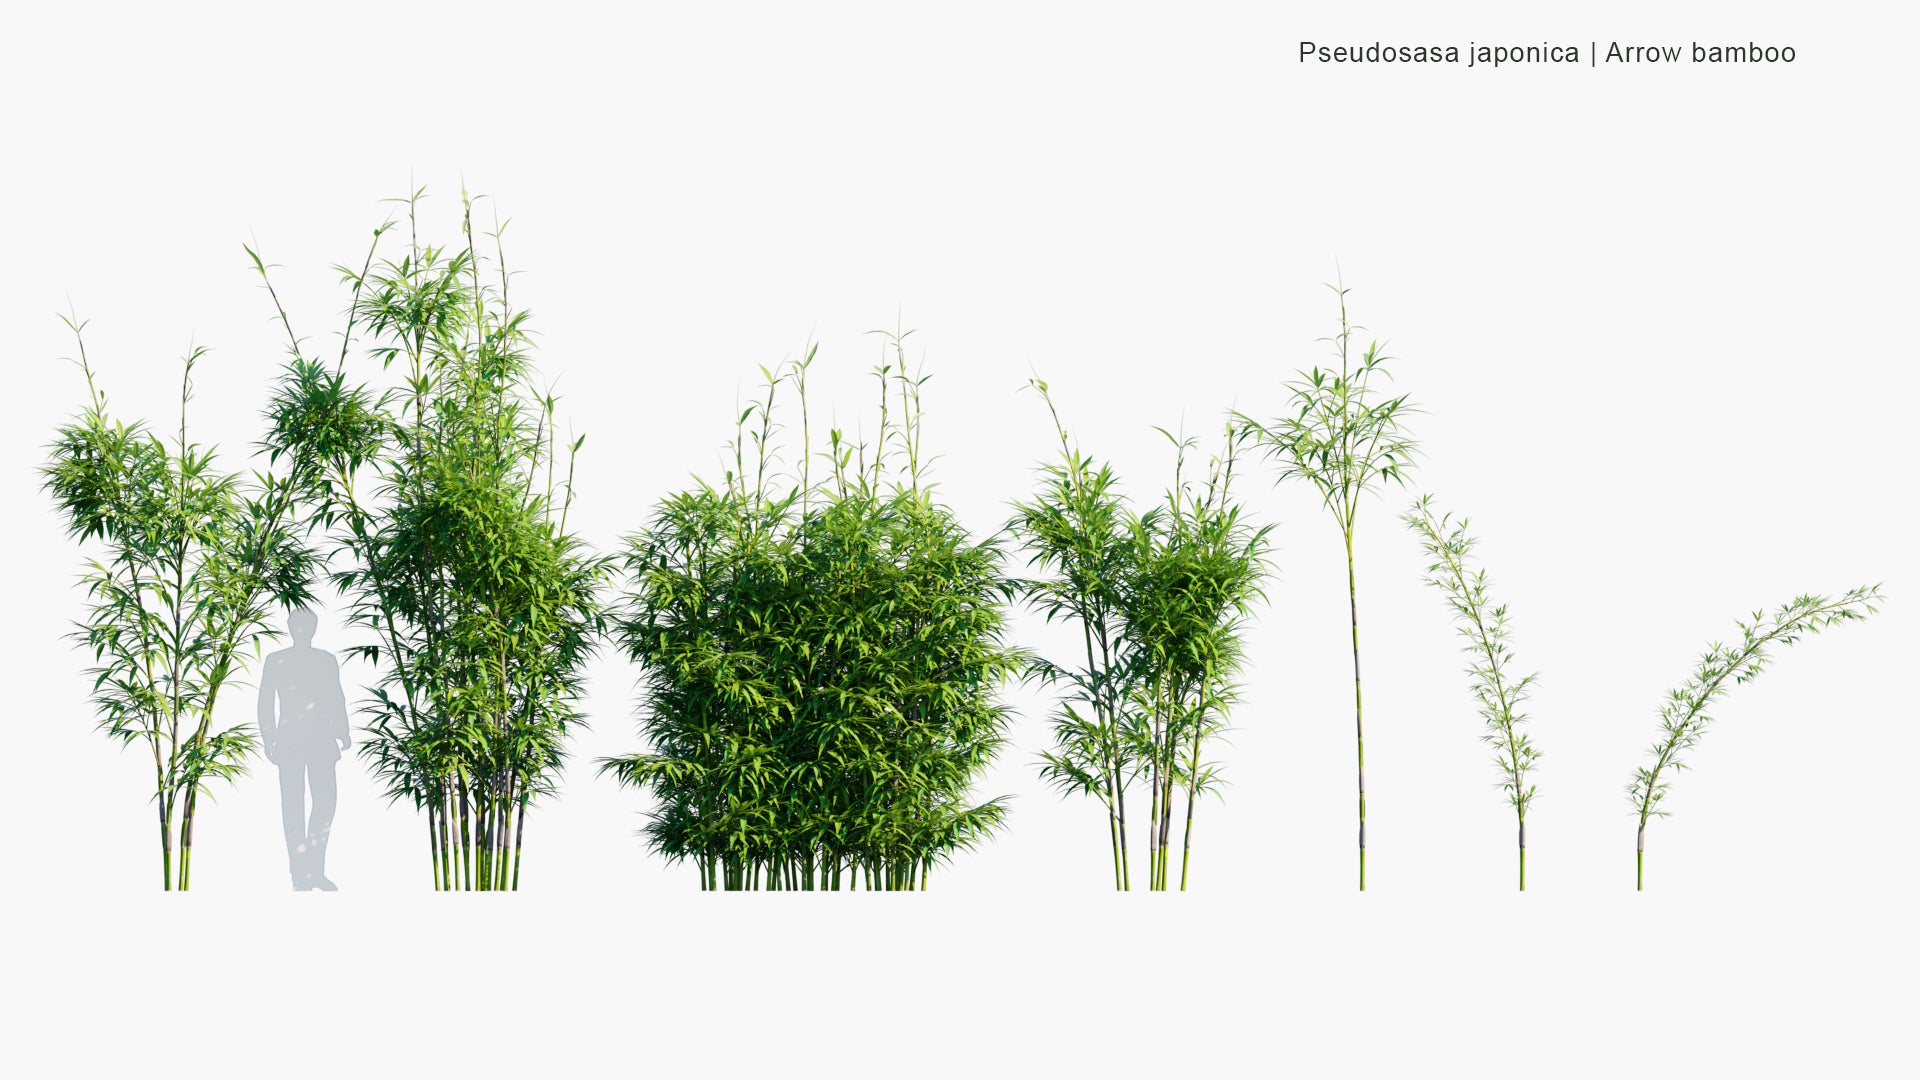 Pleioblastus Viridistriatus 'Dwarf Green Stripe' - Dwarf Green Stripe Bamboo